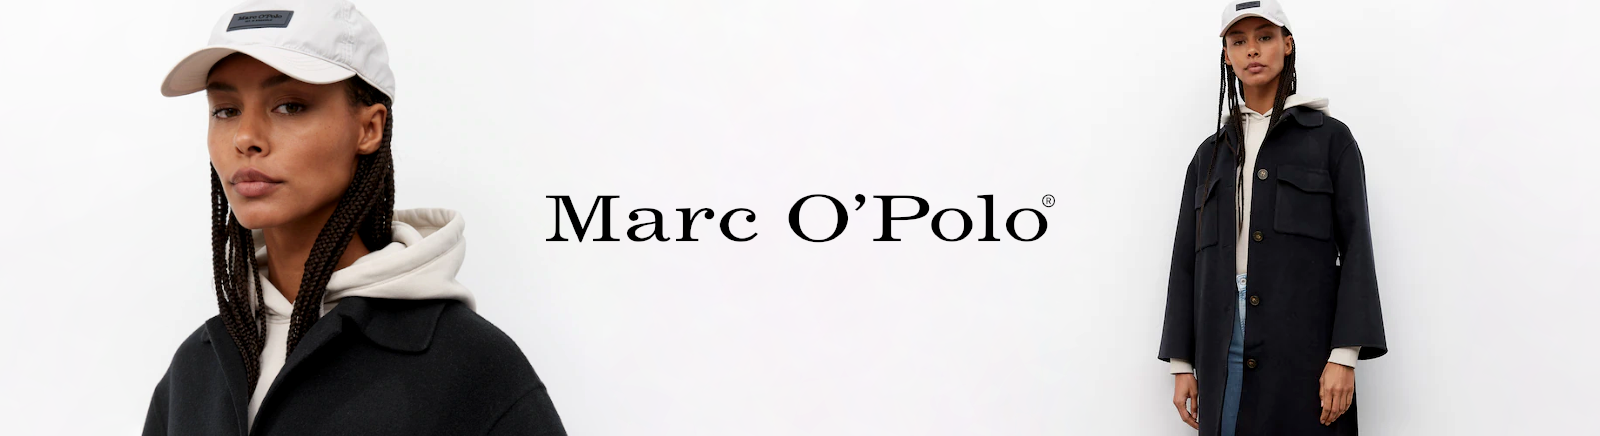 Juppen: Marc O'Polo Winterboots für Damen online shoppen